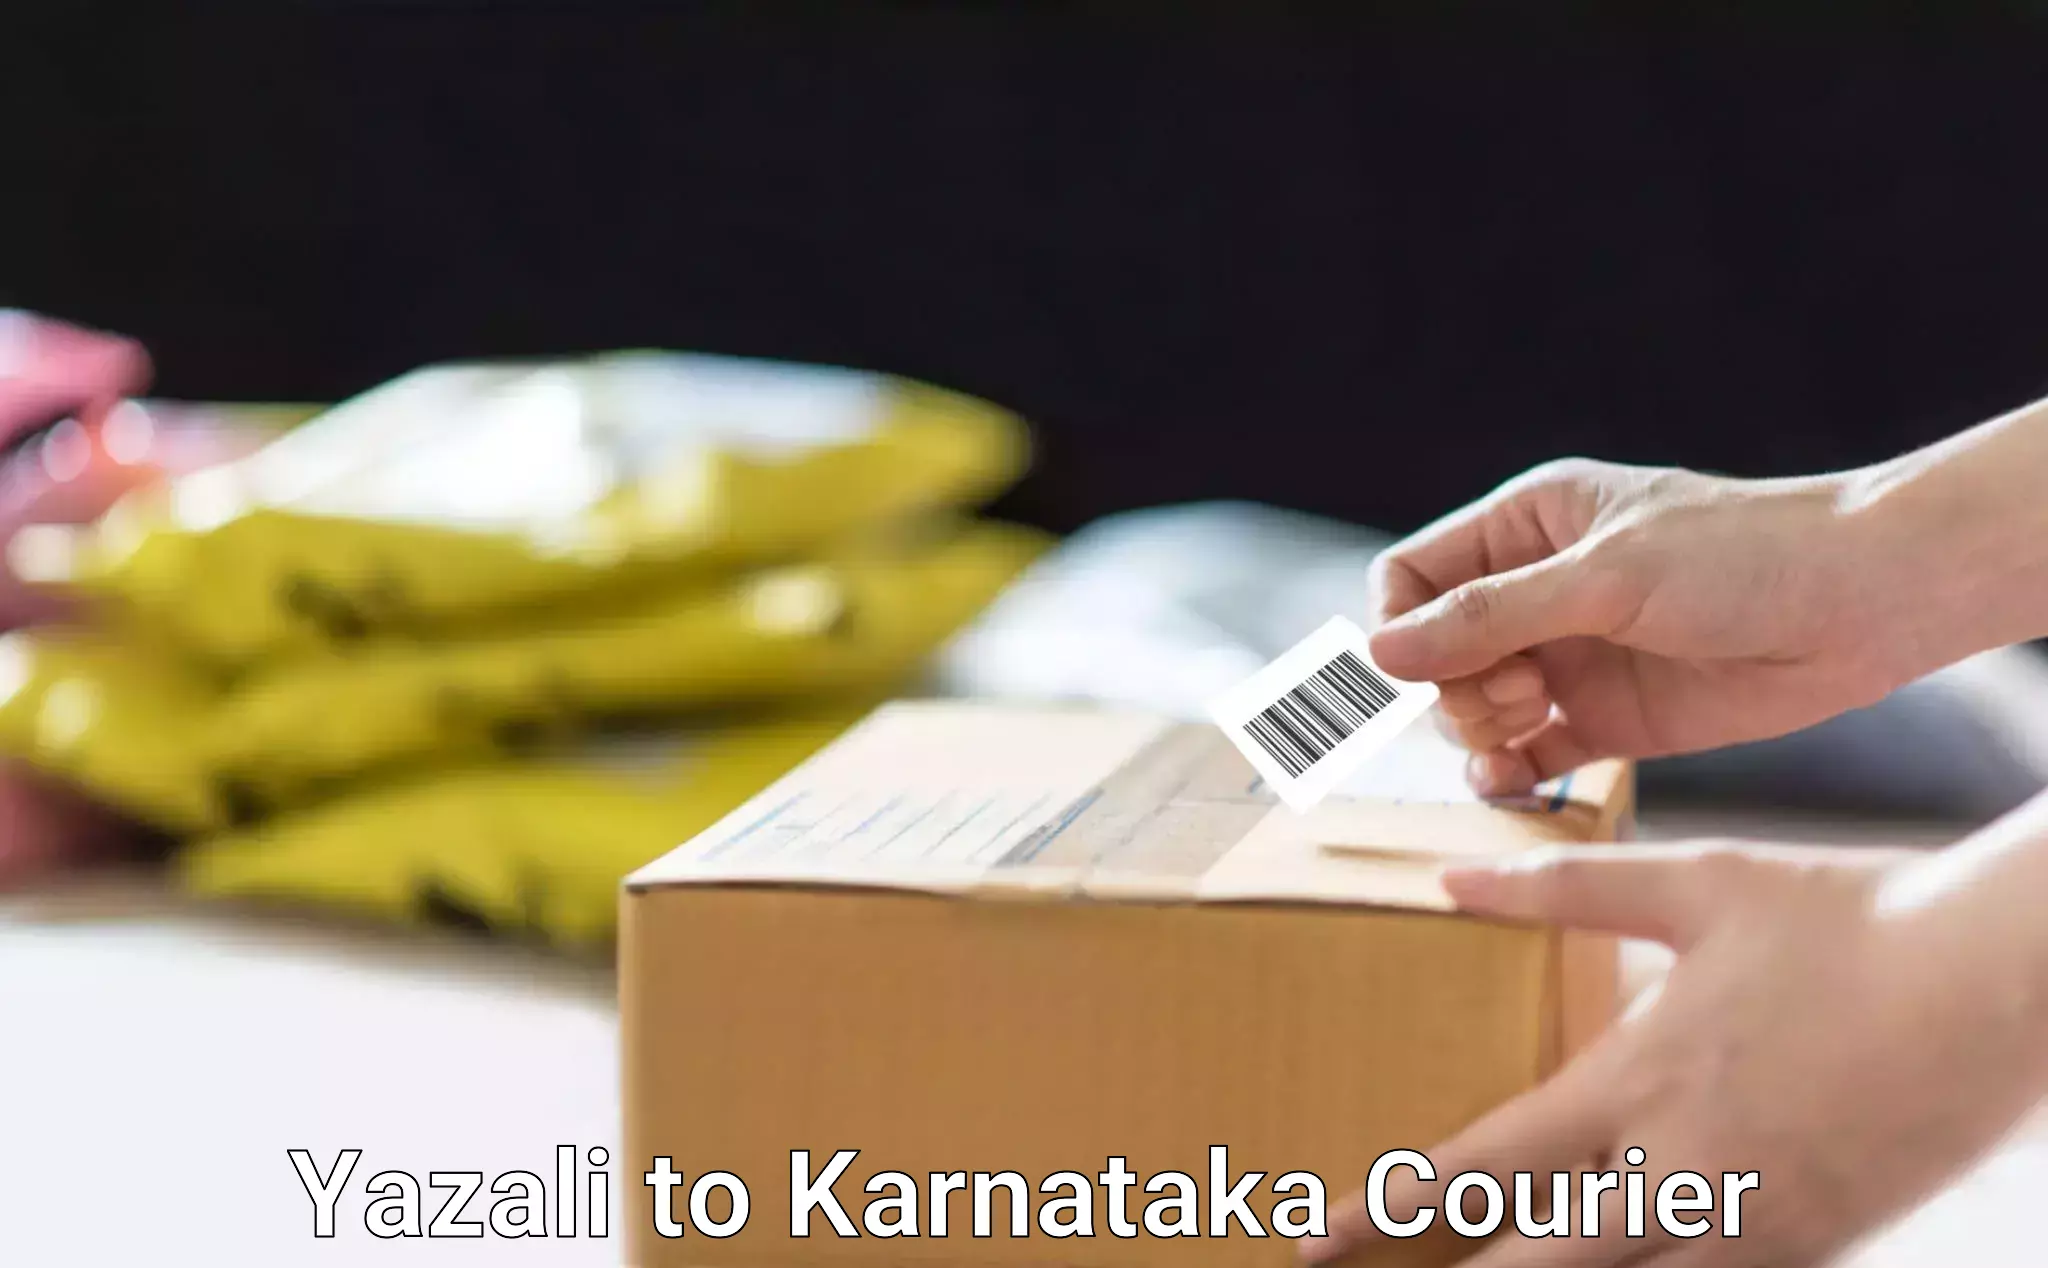 State-of-the-art courier technology in Yazali to Karnataka